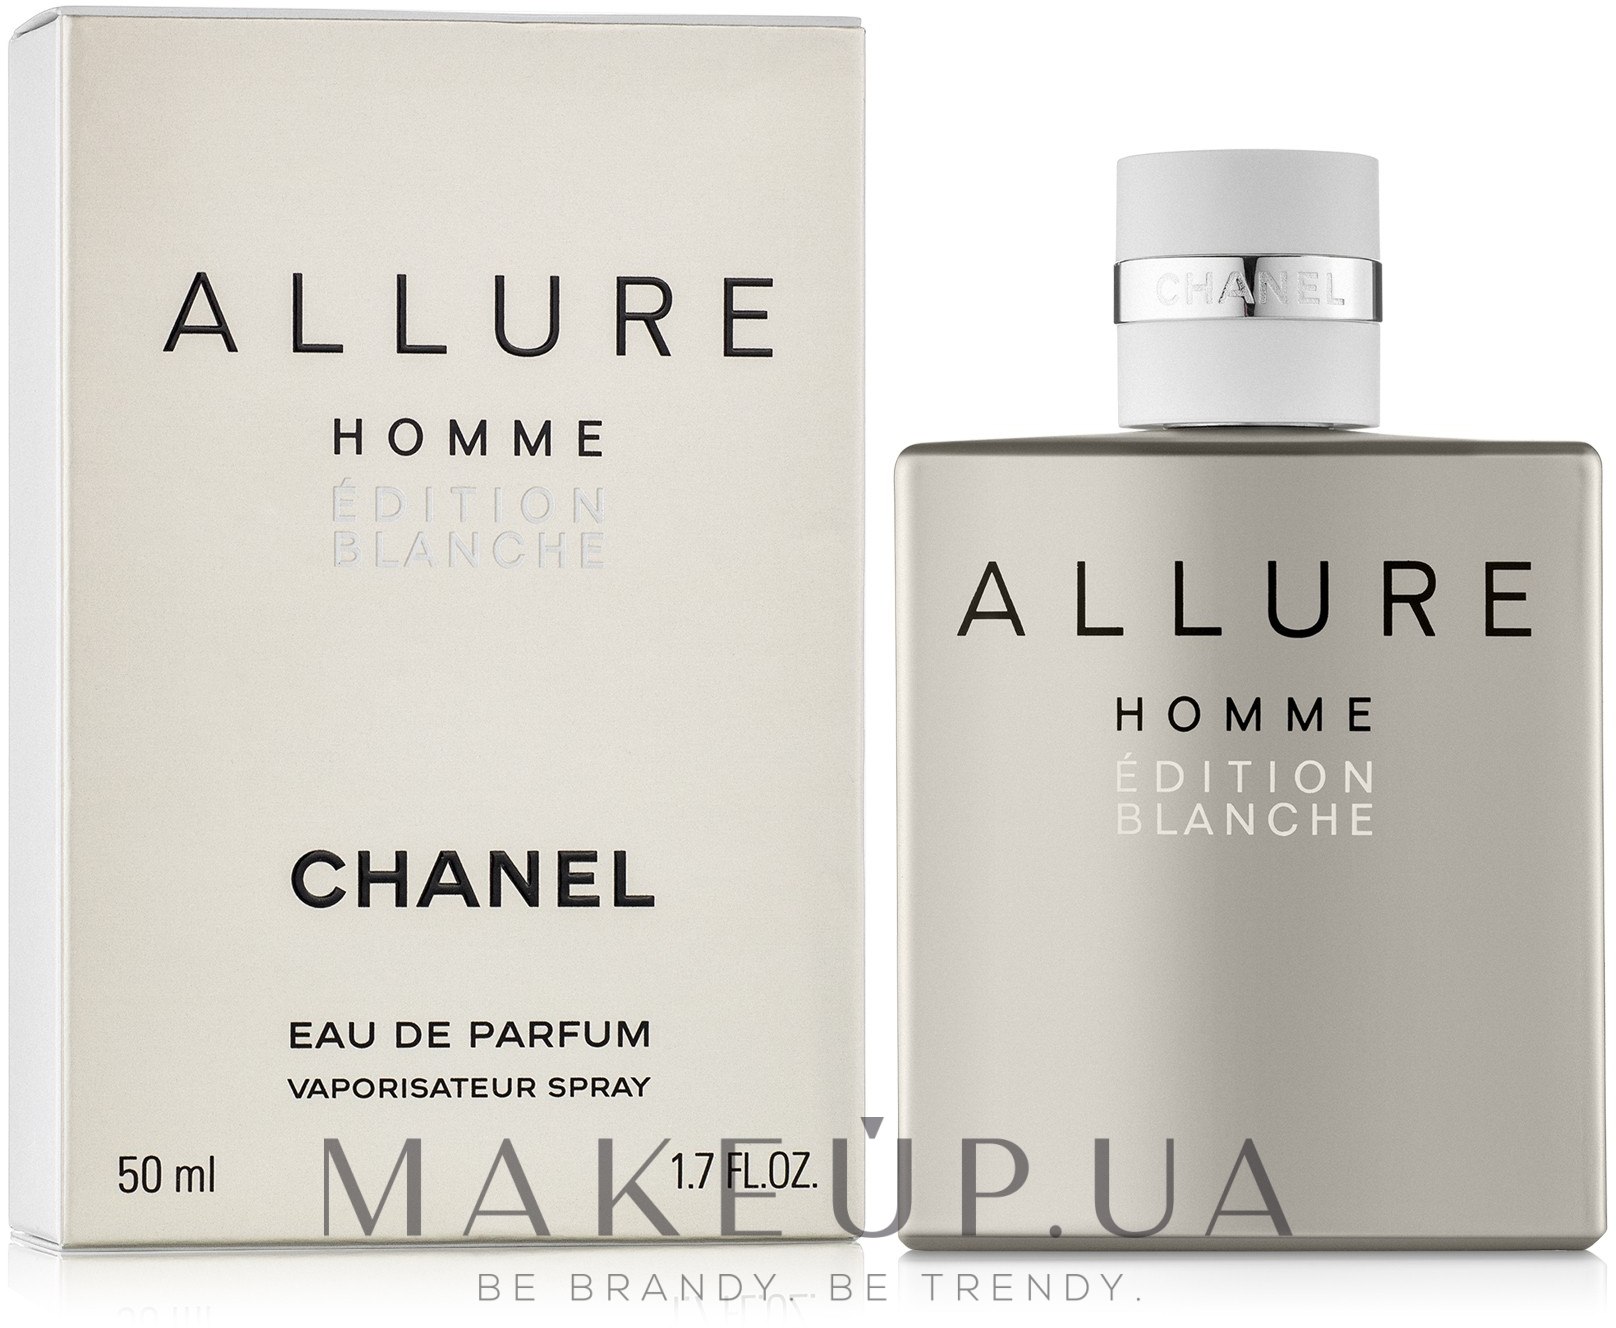 Chanel homme blanche. Chanel Allure homme Edition Blanche. Allure homme Edition Blanche 100 ml. Шанель Аллюр мужские. Шанель Аллюр Парфюм.